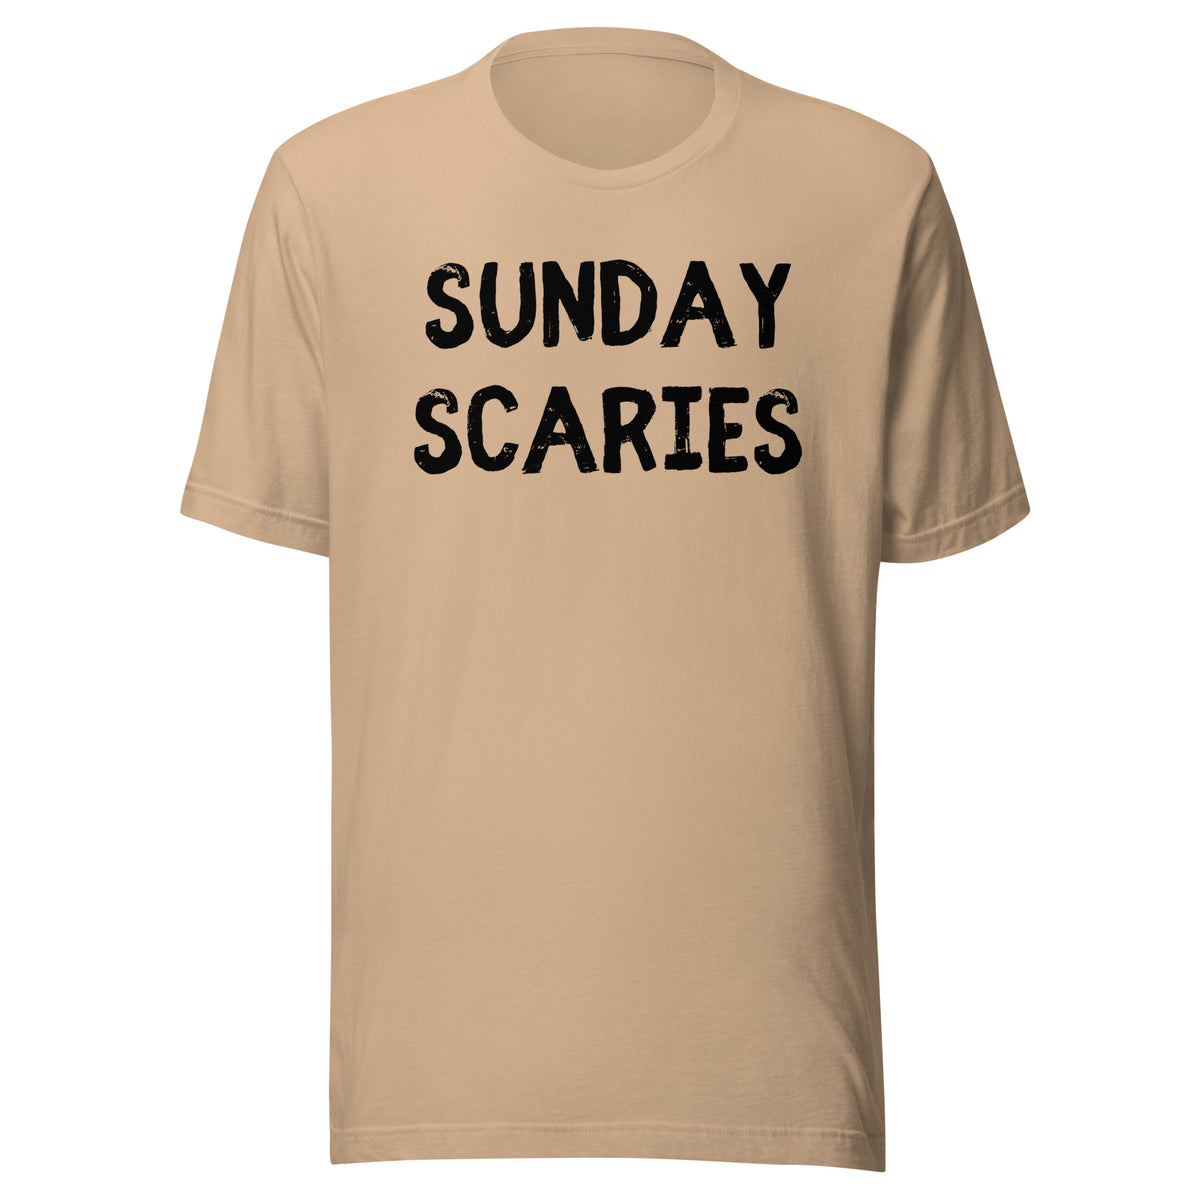 Sundary Scaries t-shirt